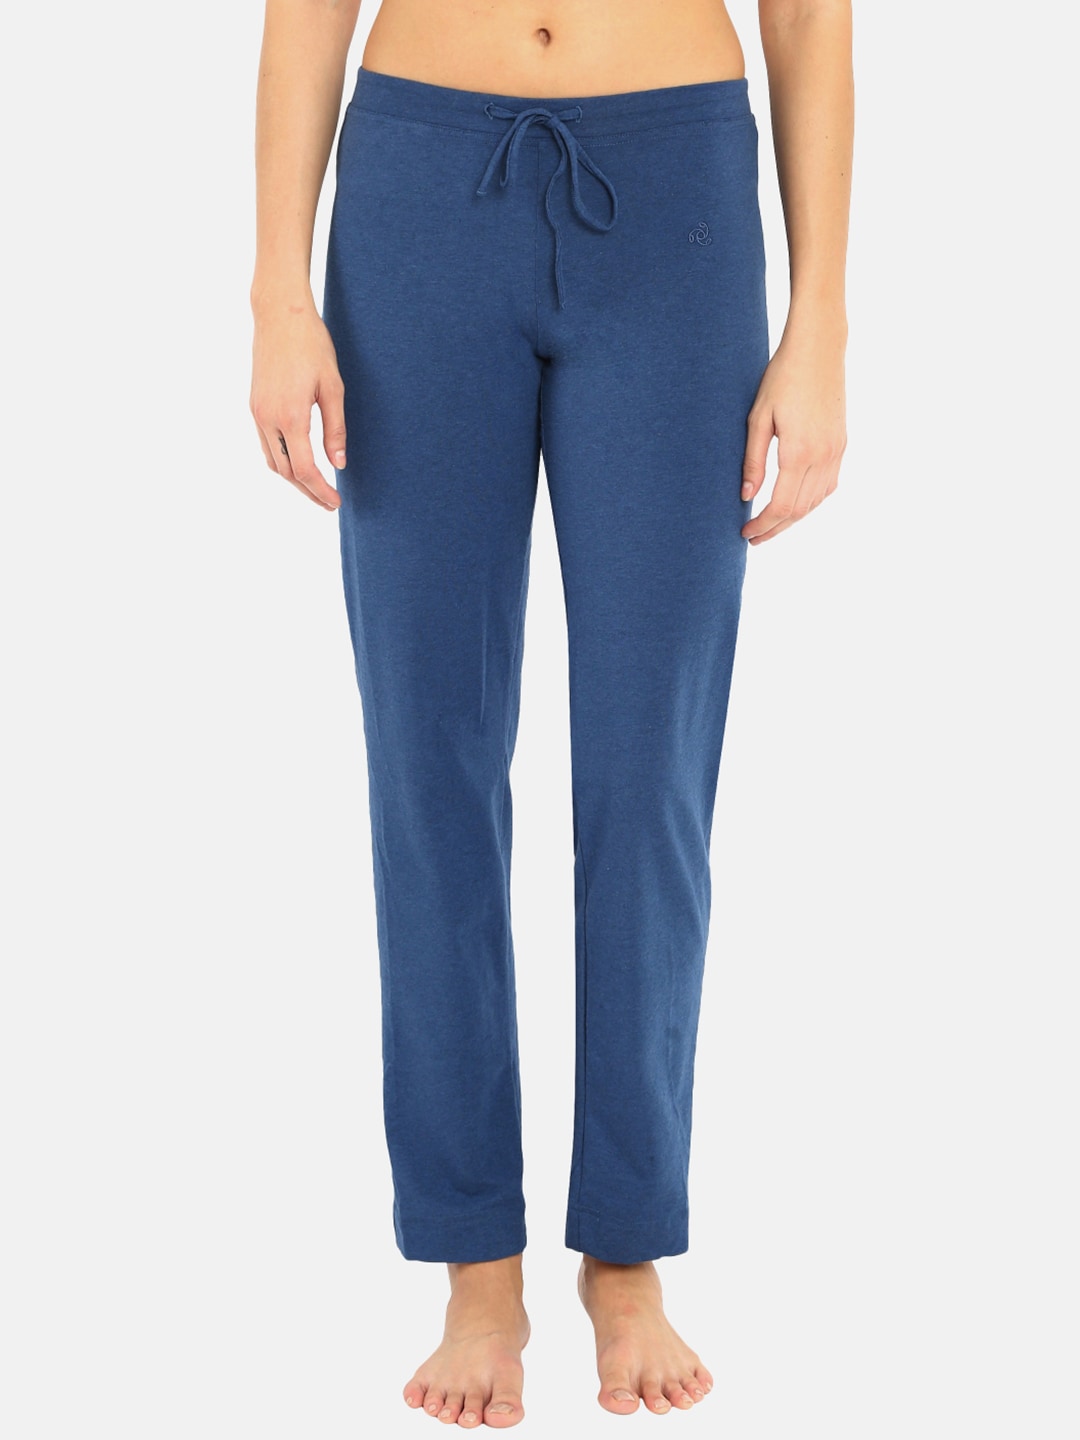 Jockey Women Blue Slim Fit Lounge Pants 1301-0105 Price in India